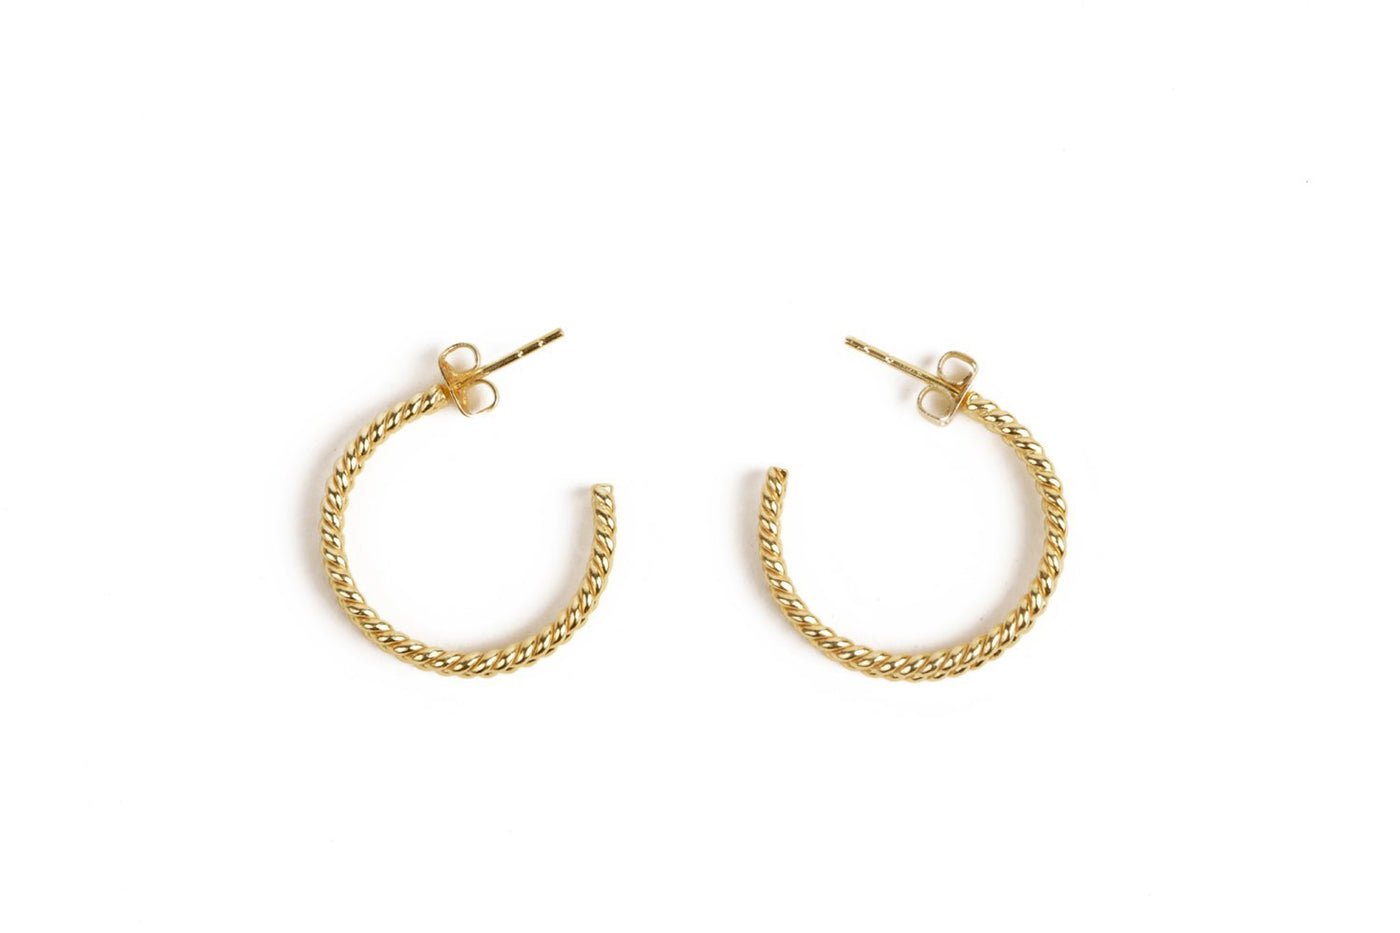 Marvellous Twisted Hoop Studs Gold Earrings for Girls - Stilskii